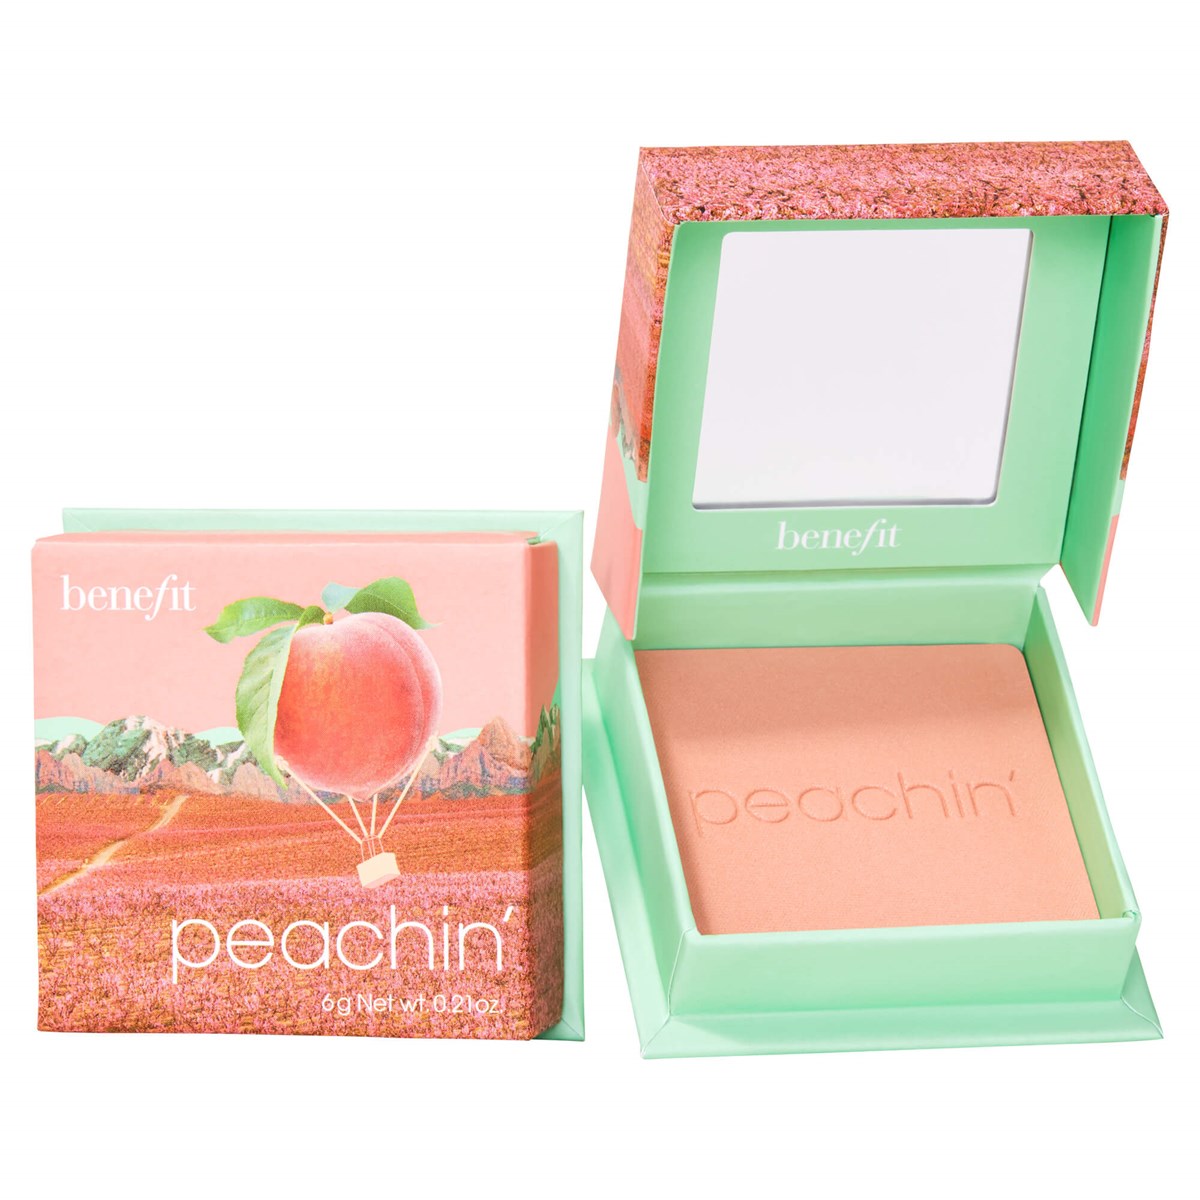 Benefit Peachin Bop Peach 2.5 G | MAKEUP | Face | Blush